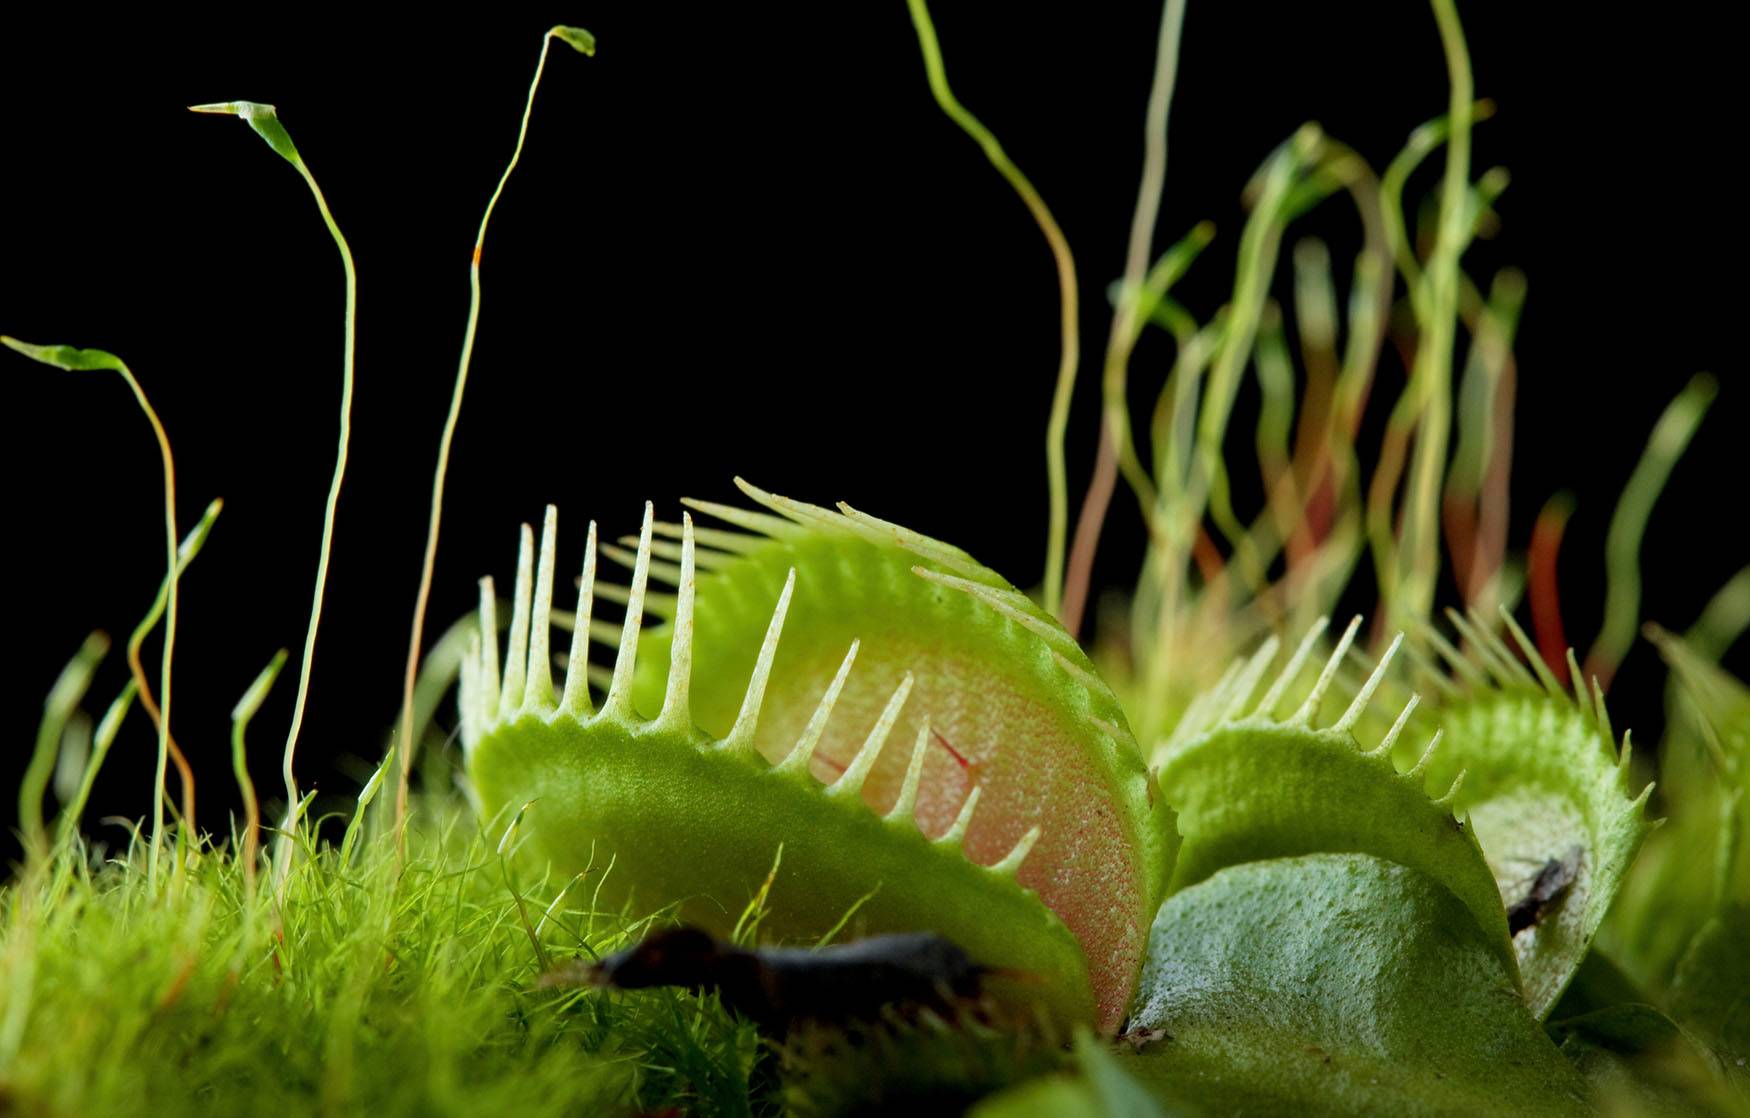 Venus flytraps are even crazier than we knowing